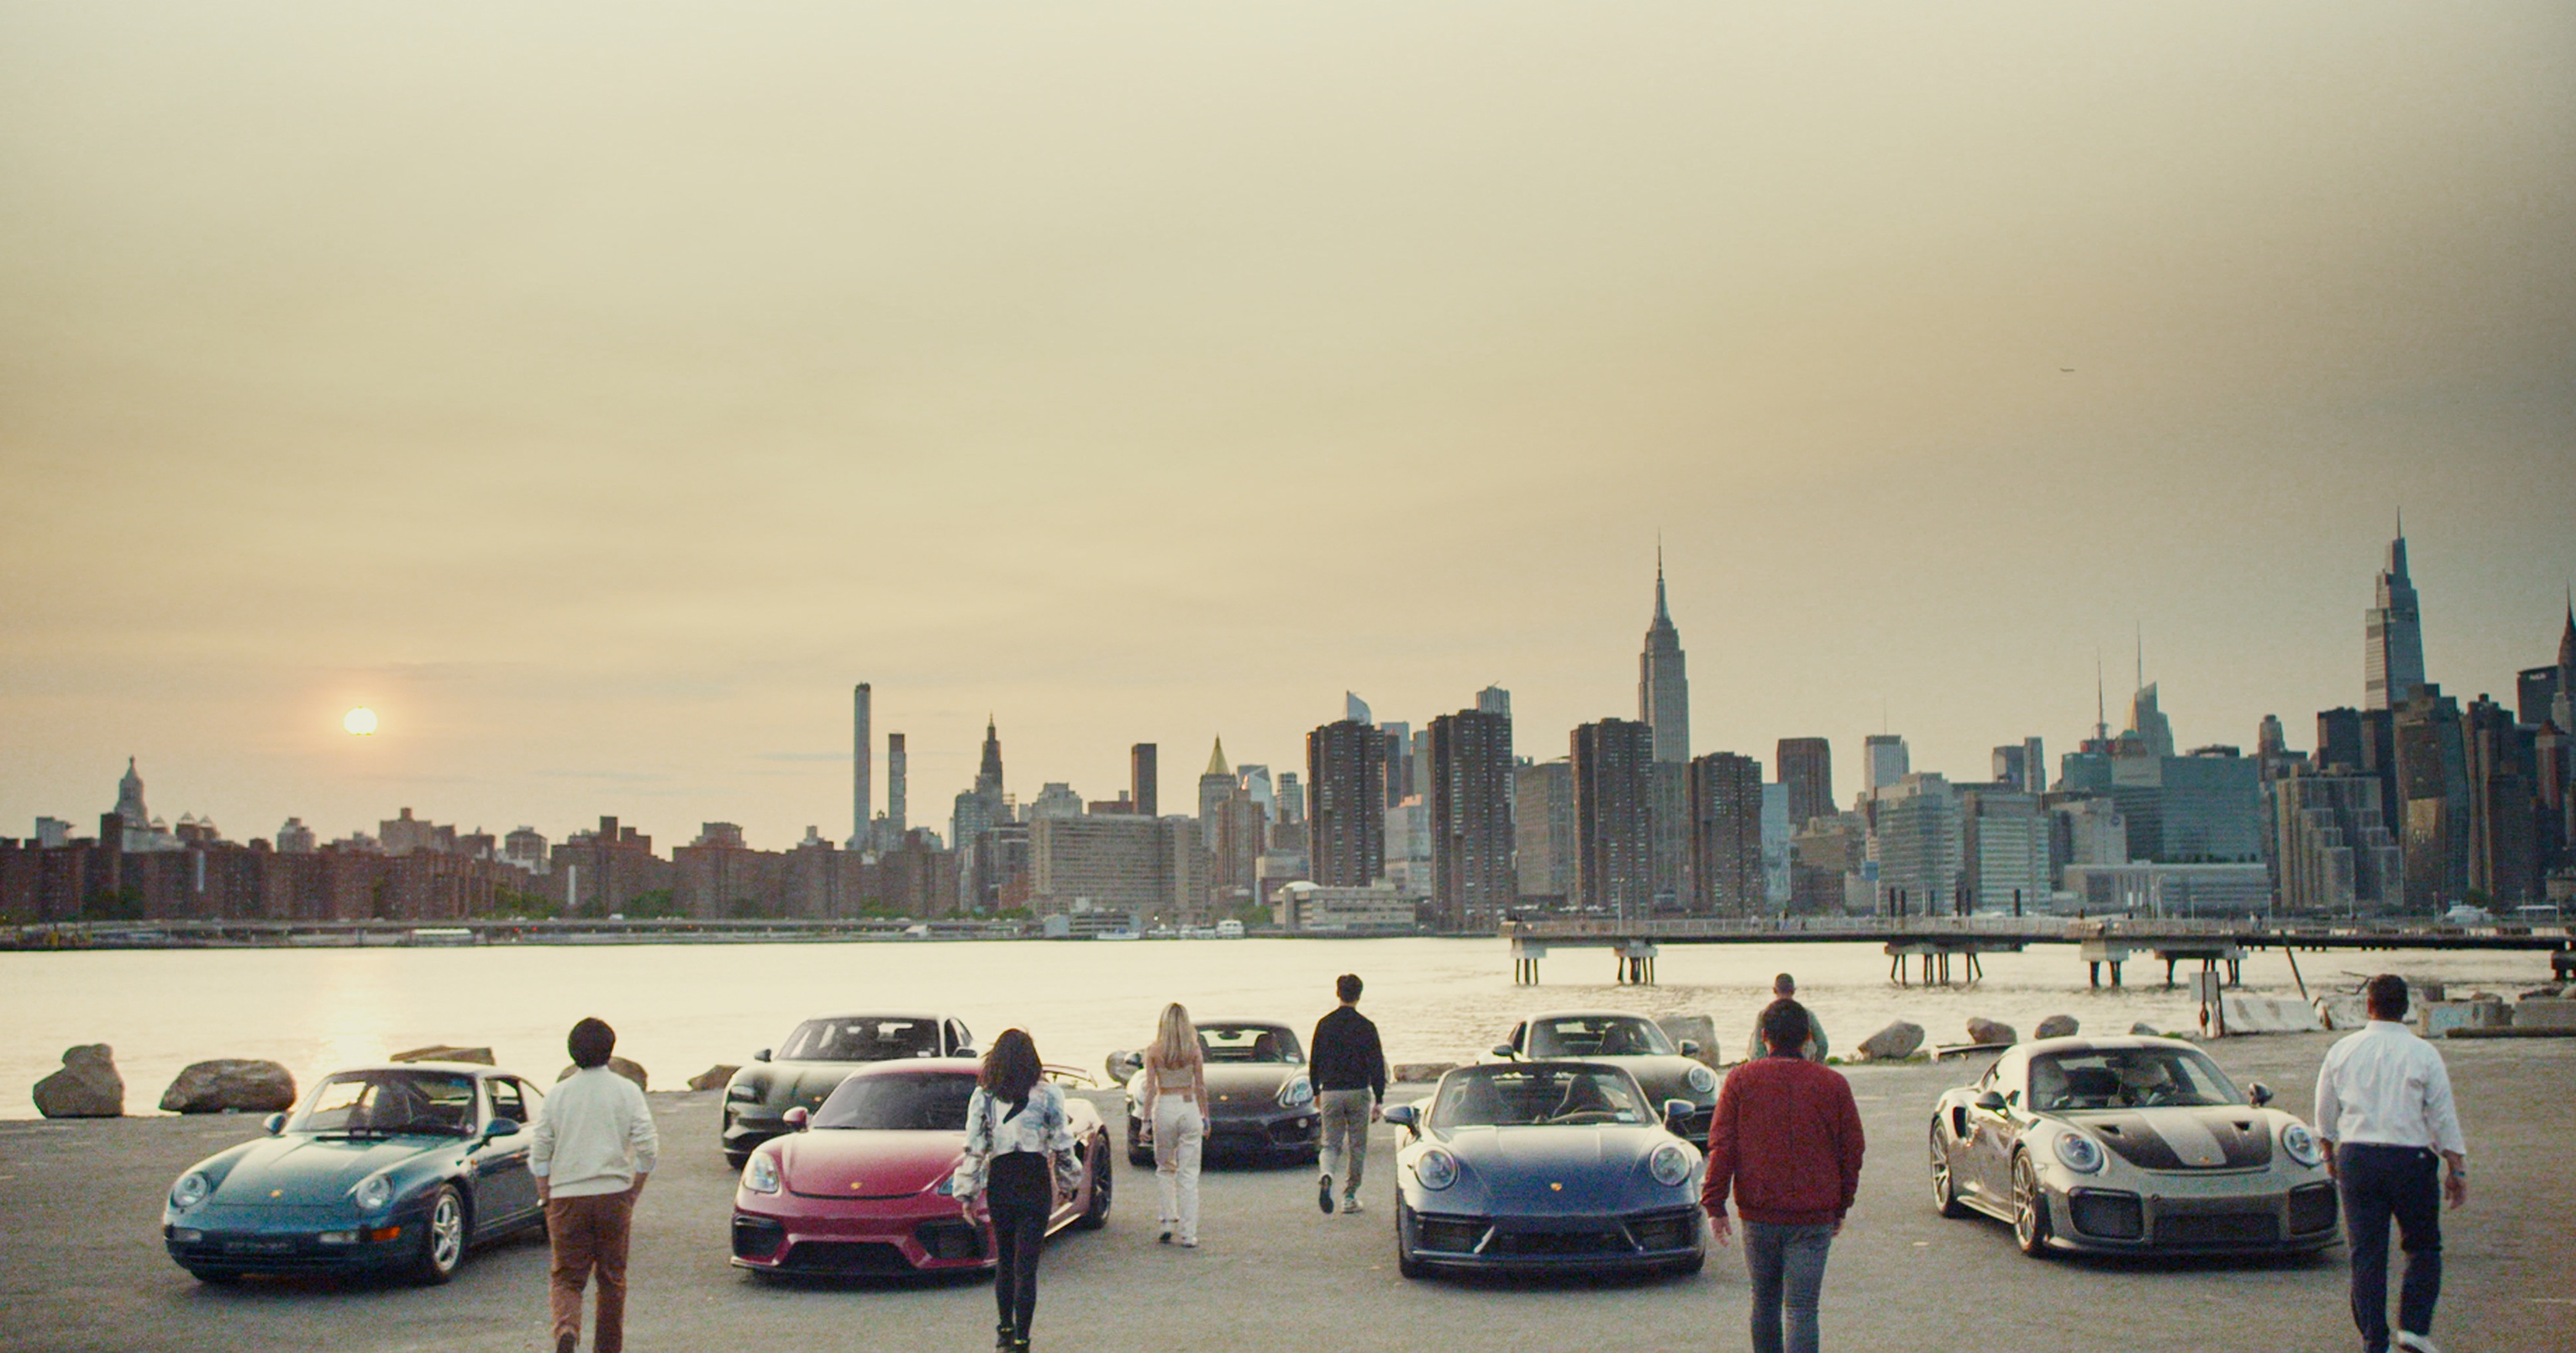 Men and women walks towards Porsche cars, Manhattan in background